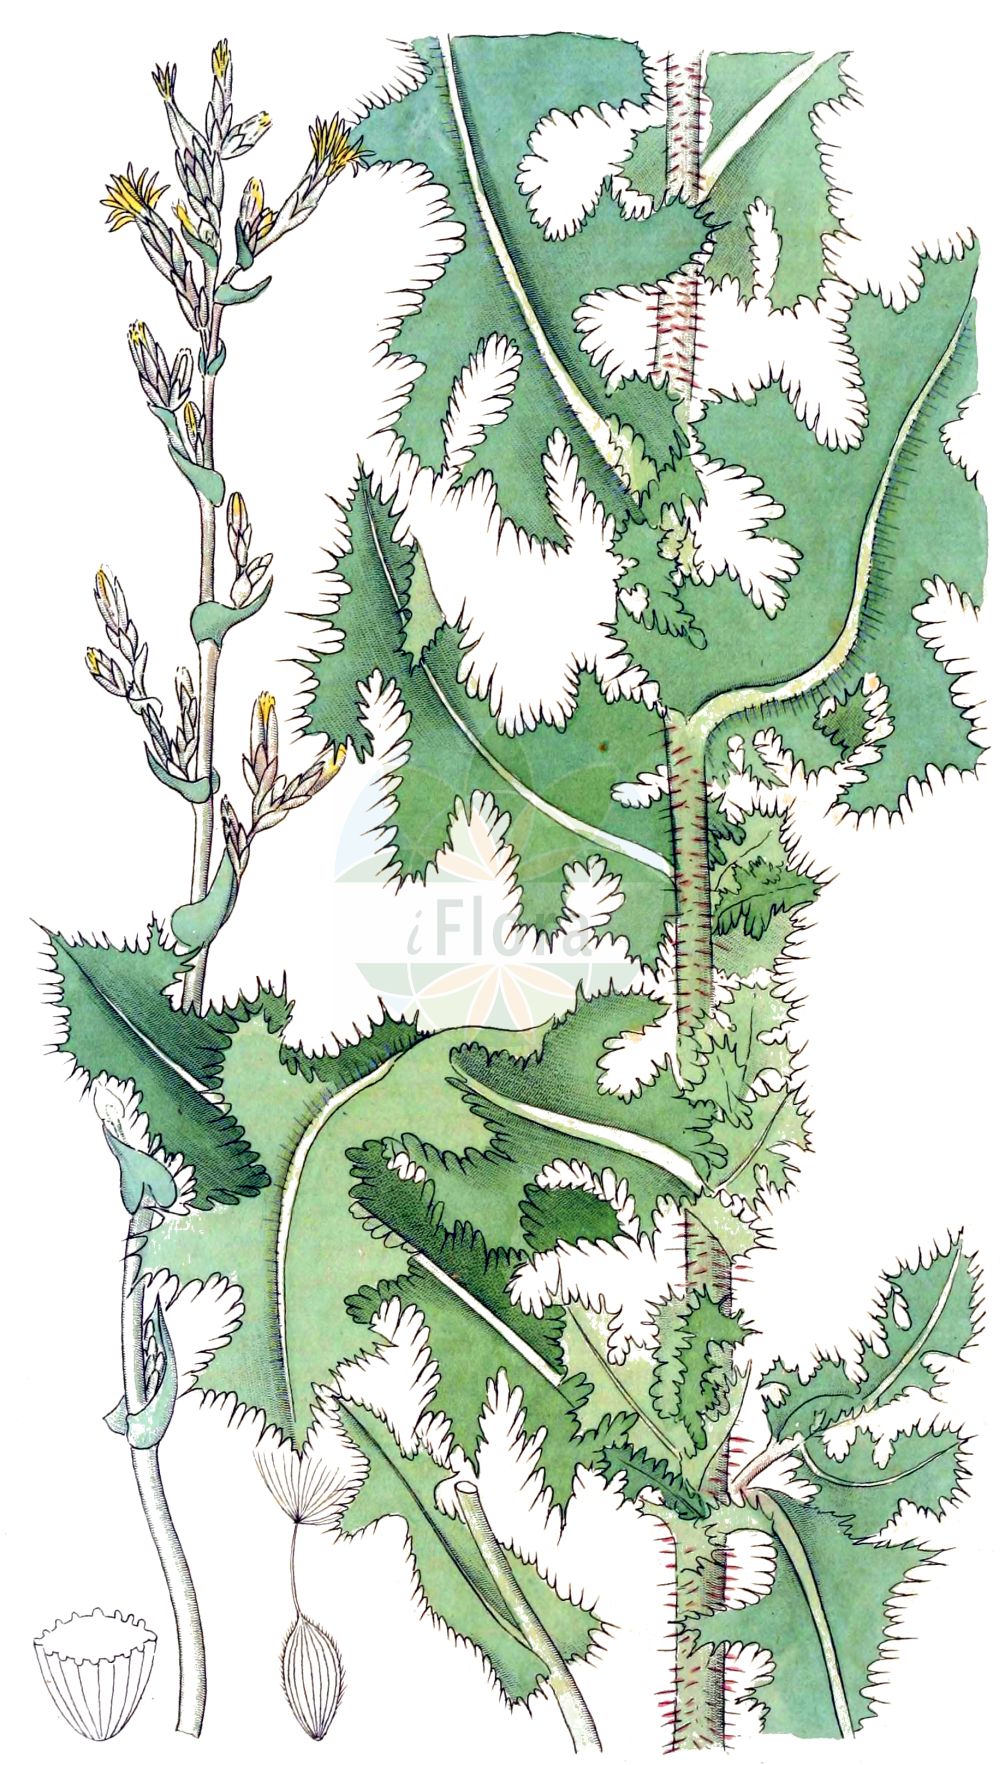 Historische Abbildung von Lactuca serriola (Kompaß-Lattich - Prickly Lettuce). Das Bild zeigt Blatt, Bluete, Frucht und Same. ---- Historical Drawing of Lactuca serriola (Kompaß-Lattich - Prickly Lettuce). The image is showing leaf, flower, fruit and seed.(Lactuca serriola,Kompaß-Lattich,Prickly Lettuce,Lactuca altaica,Lactuca augustana,Lactuca coriacea,Lactuca dubia,Lactuca kemaliya,Lactuca scariola,Lactuca serriola,Lactuca sylvestris,Lactuca tephrocarpa,Lactuca virosa var. integrifolia,Kompass-Lattich,Stachel-Lattich,Prickly Lettuce,Compass Plant,Wild Lettuce,Lactuca,Lattich,Lettuce,Asteraceae,Korbblütengewächse,Daisy family,Blatt,Bluete,Frucht,Same,leaf,flower,fruit,seed,Svensk Botanik (Svensk Botanik))